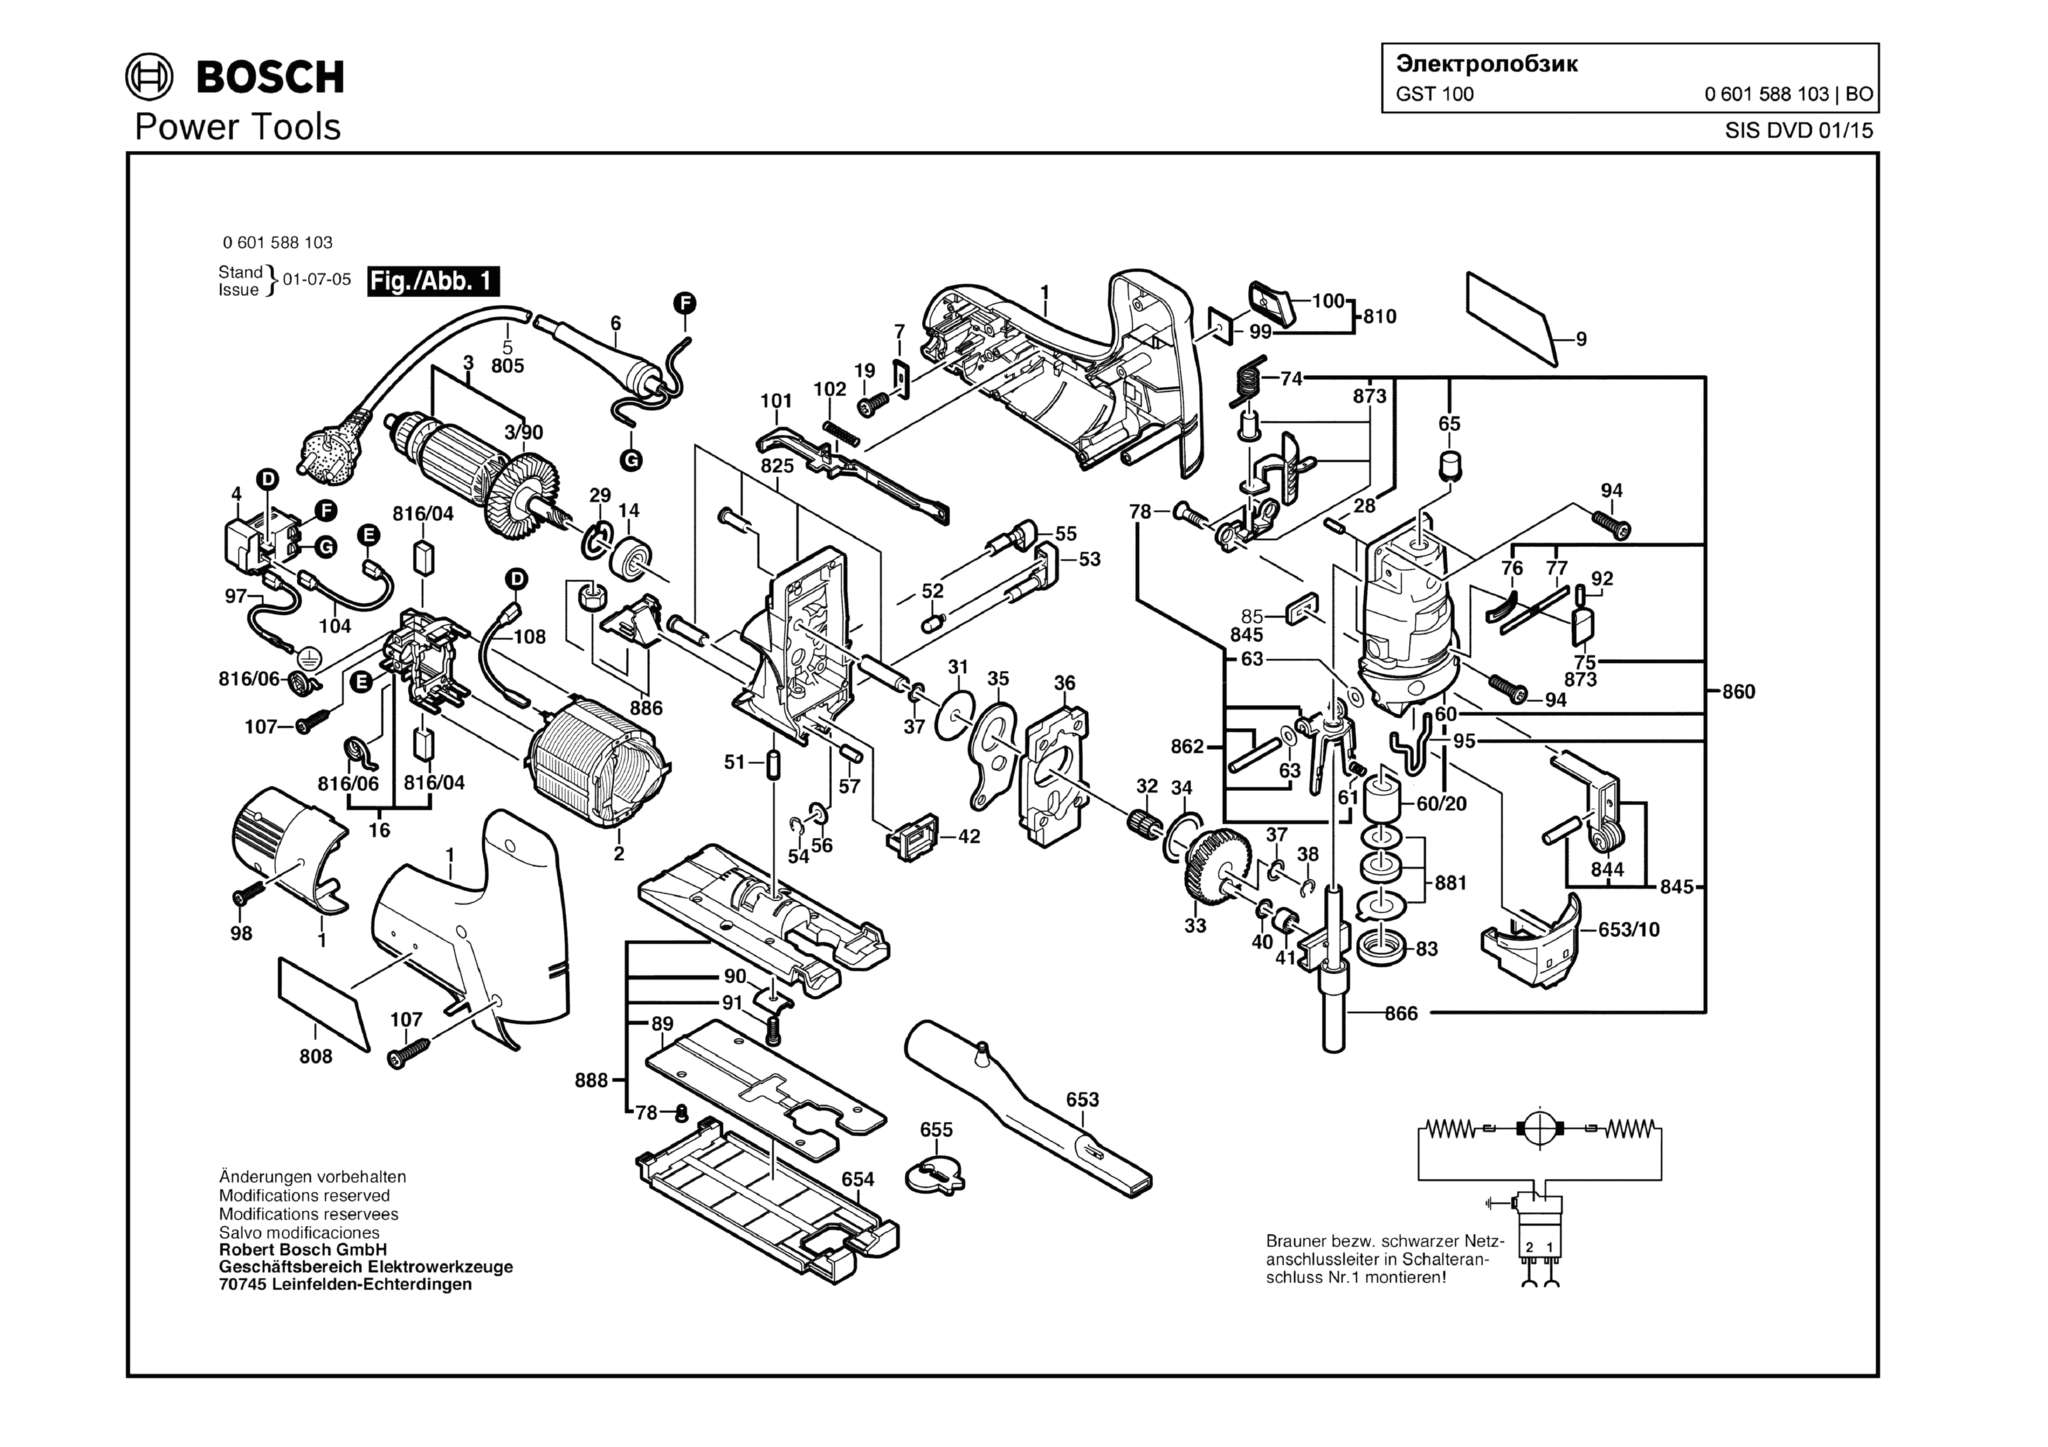 Запчасти, схема и деталировка Bosch GST 100 (ТИП 0601588103)